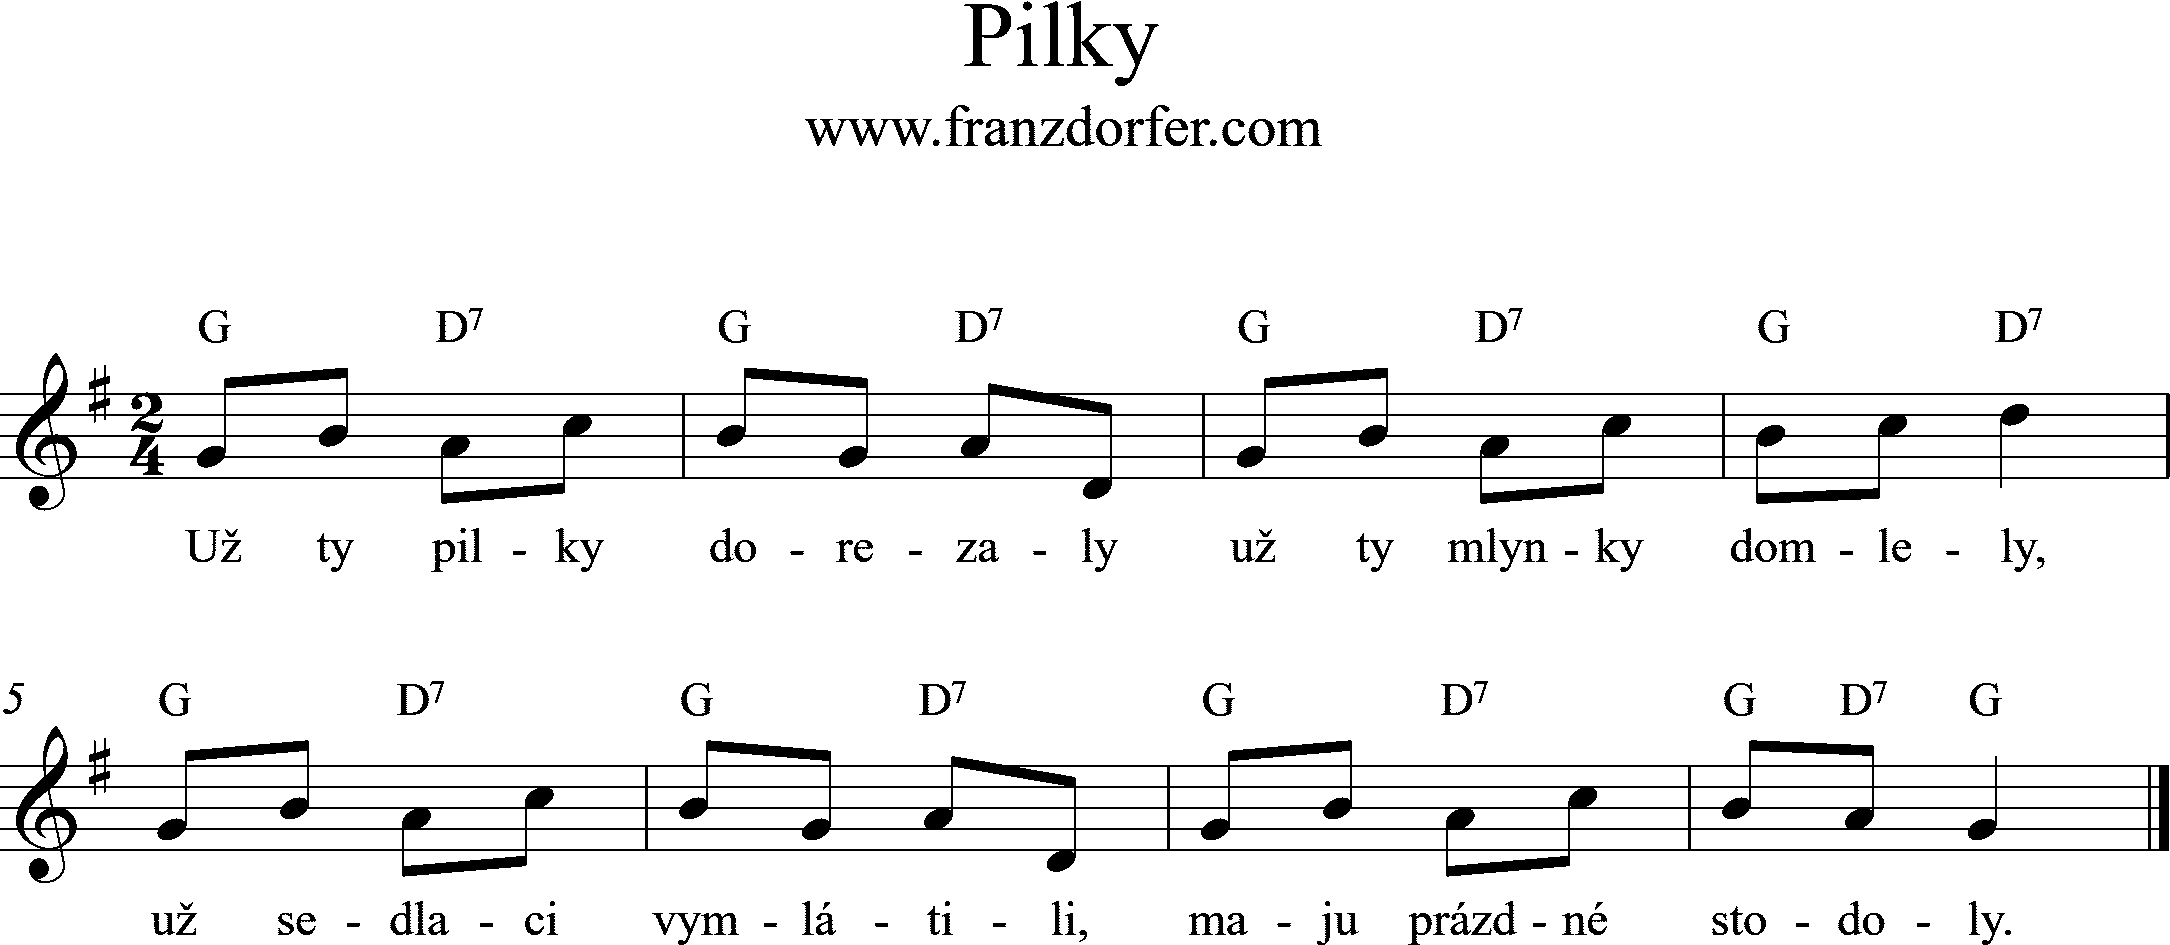 sheetmusic, Pilky